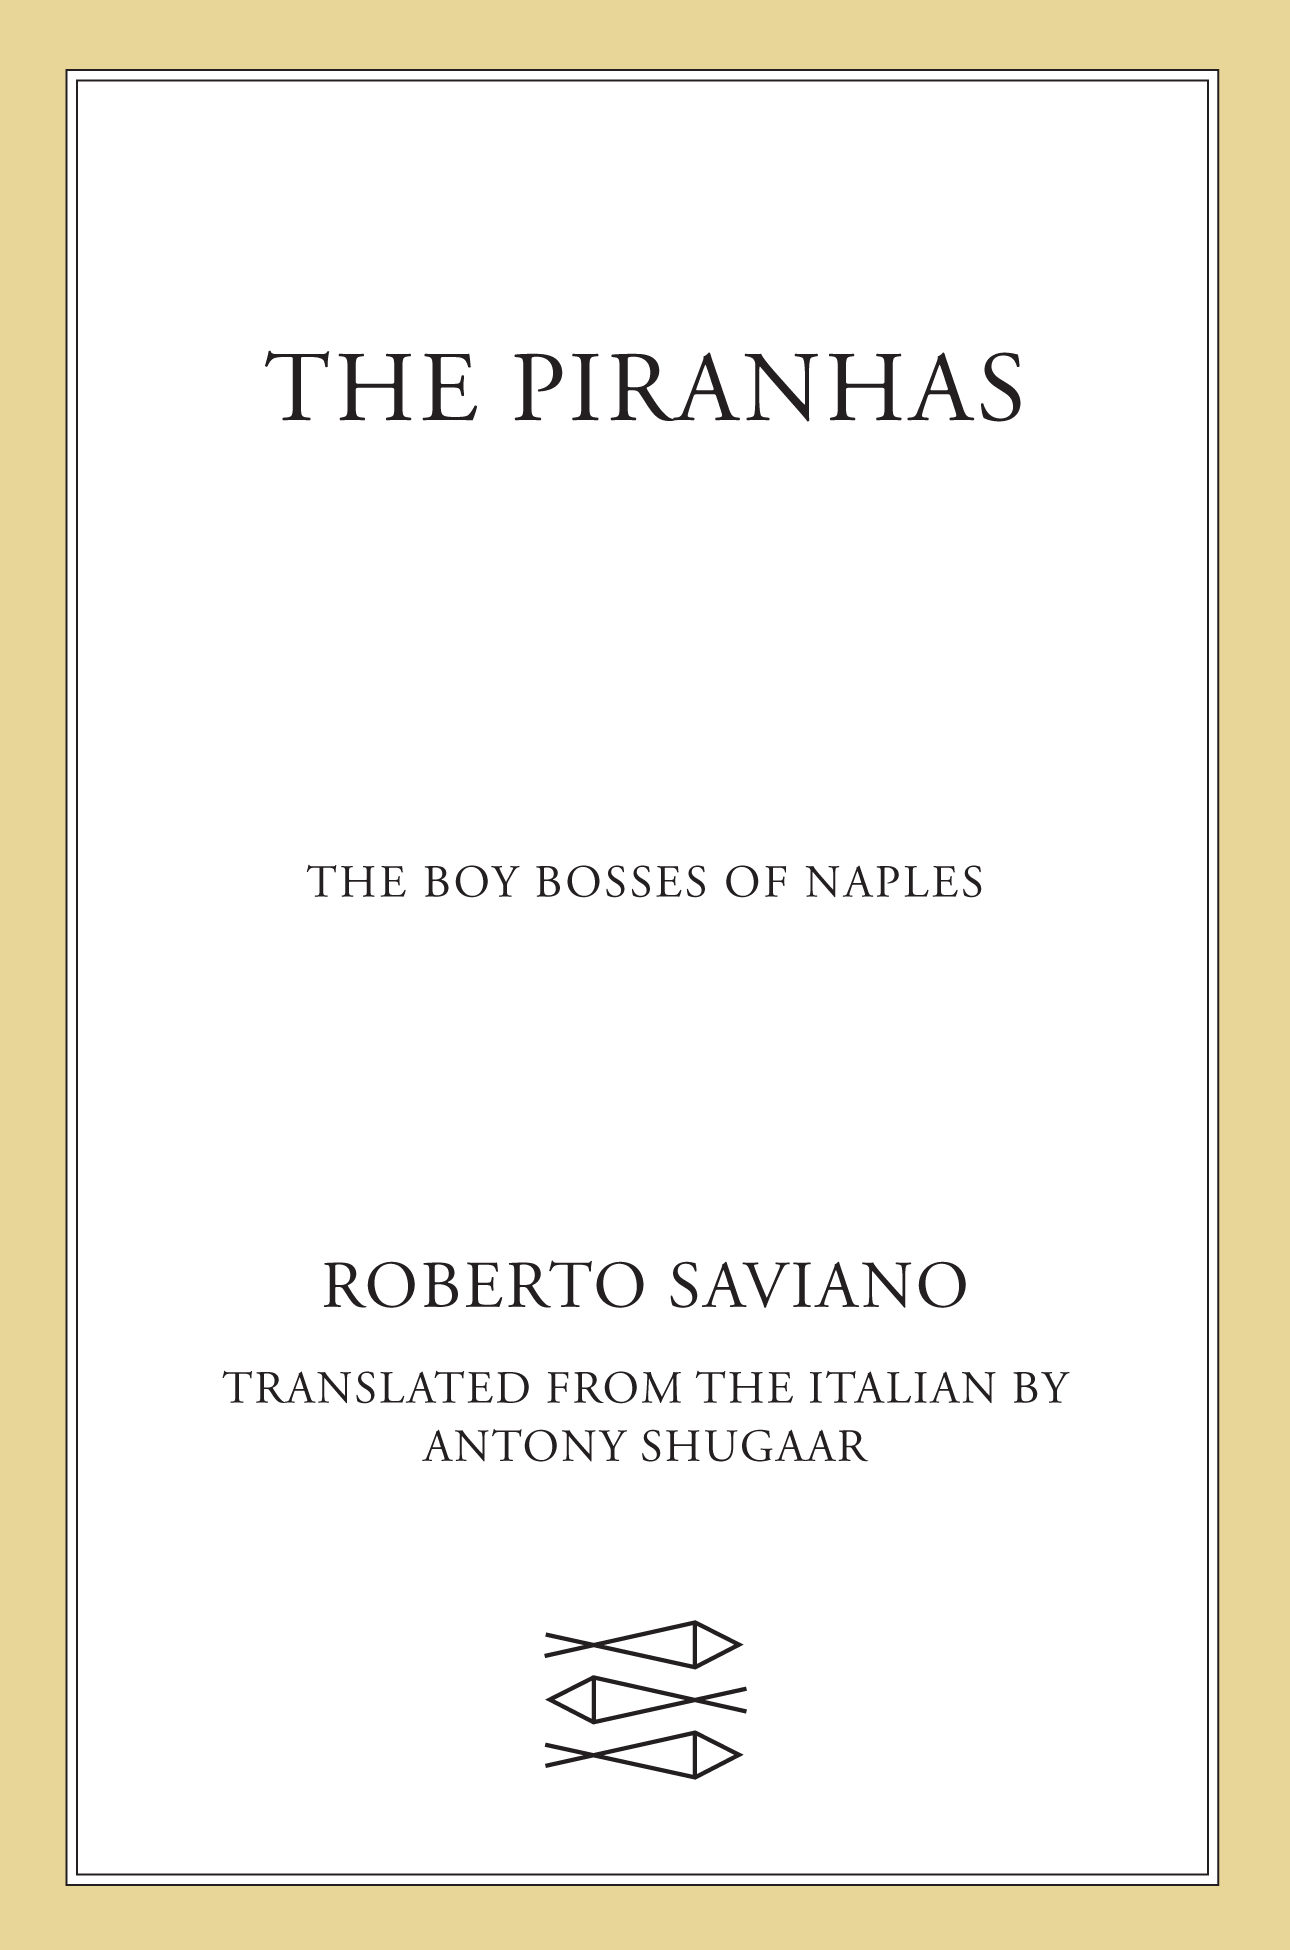 The Piranhas, The Boy Bosses of Naples